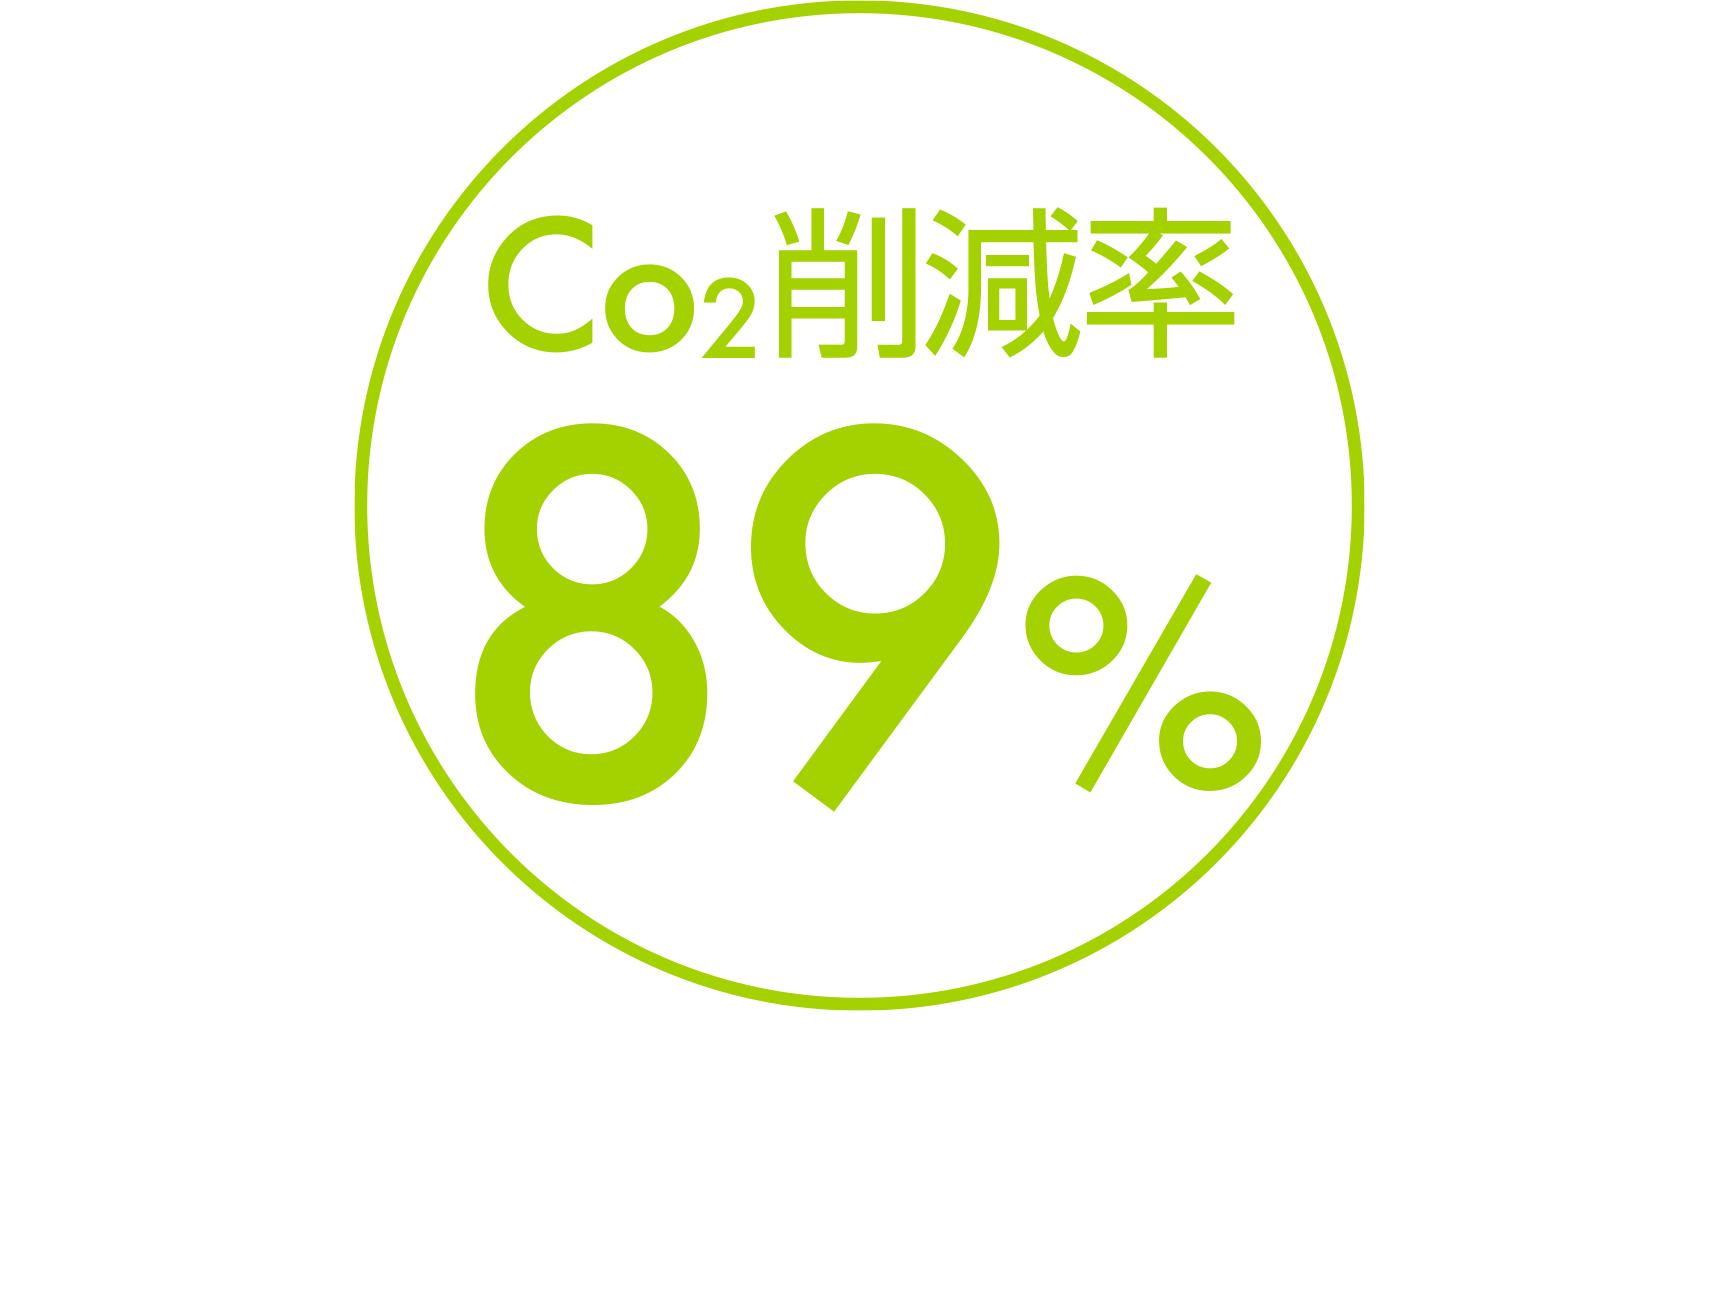 CO2削減率89%